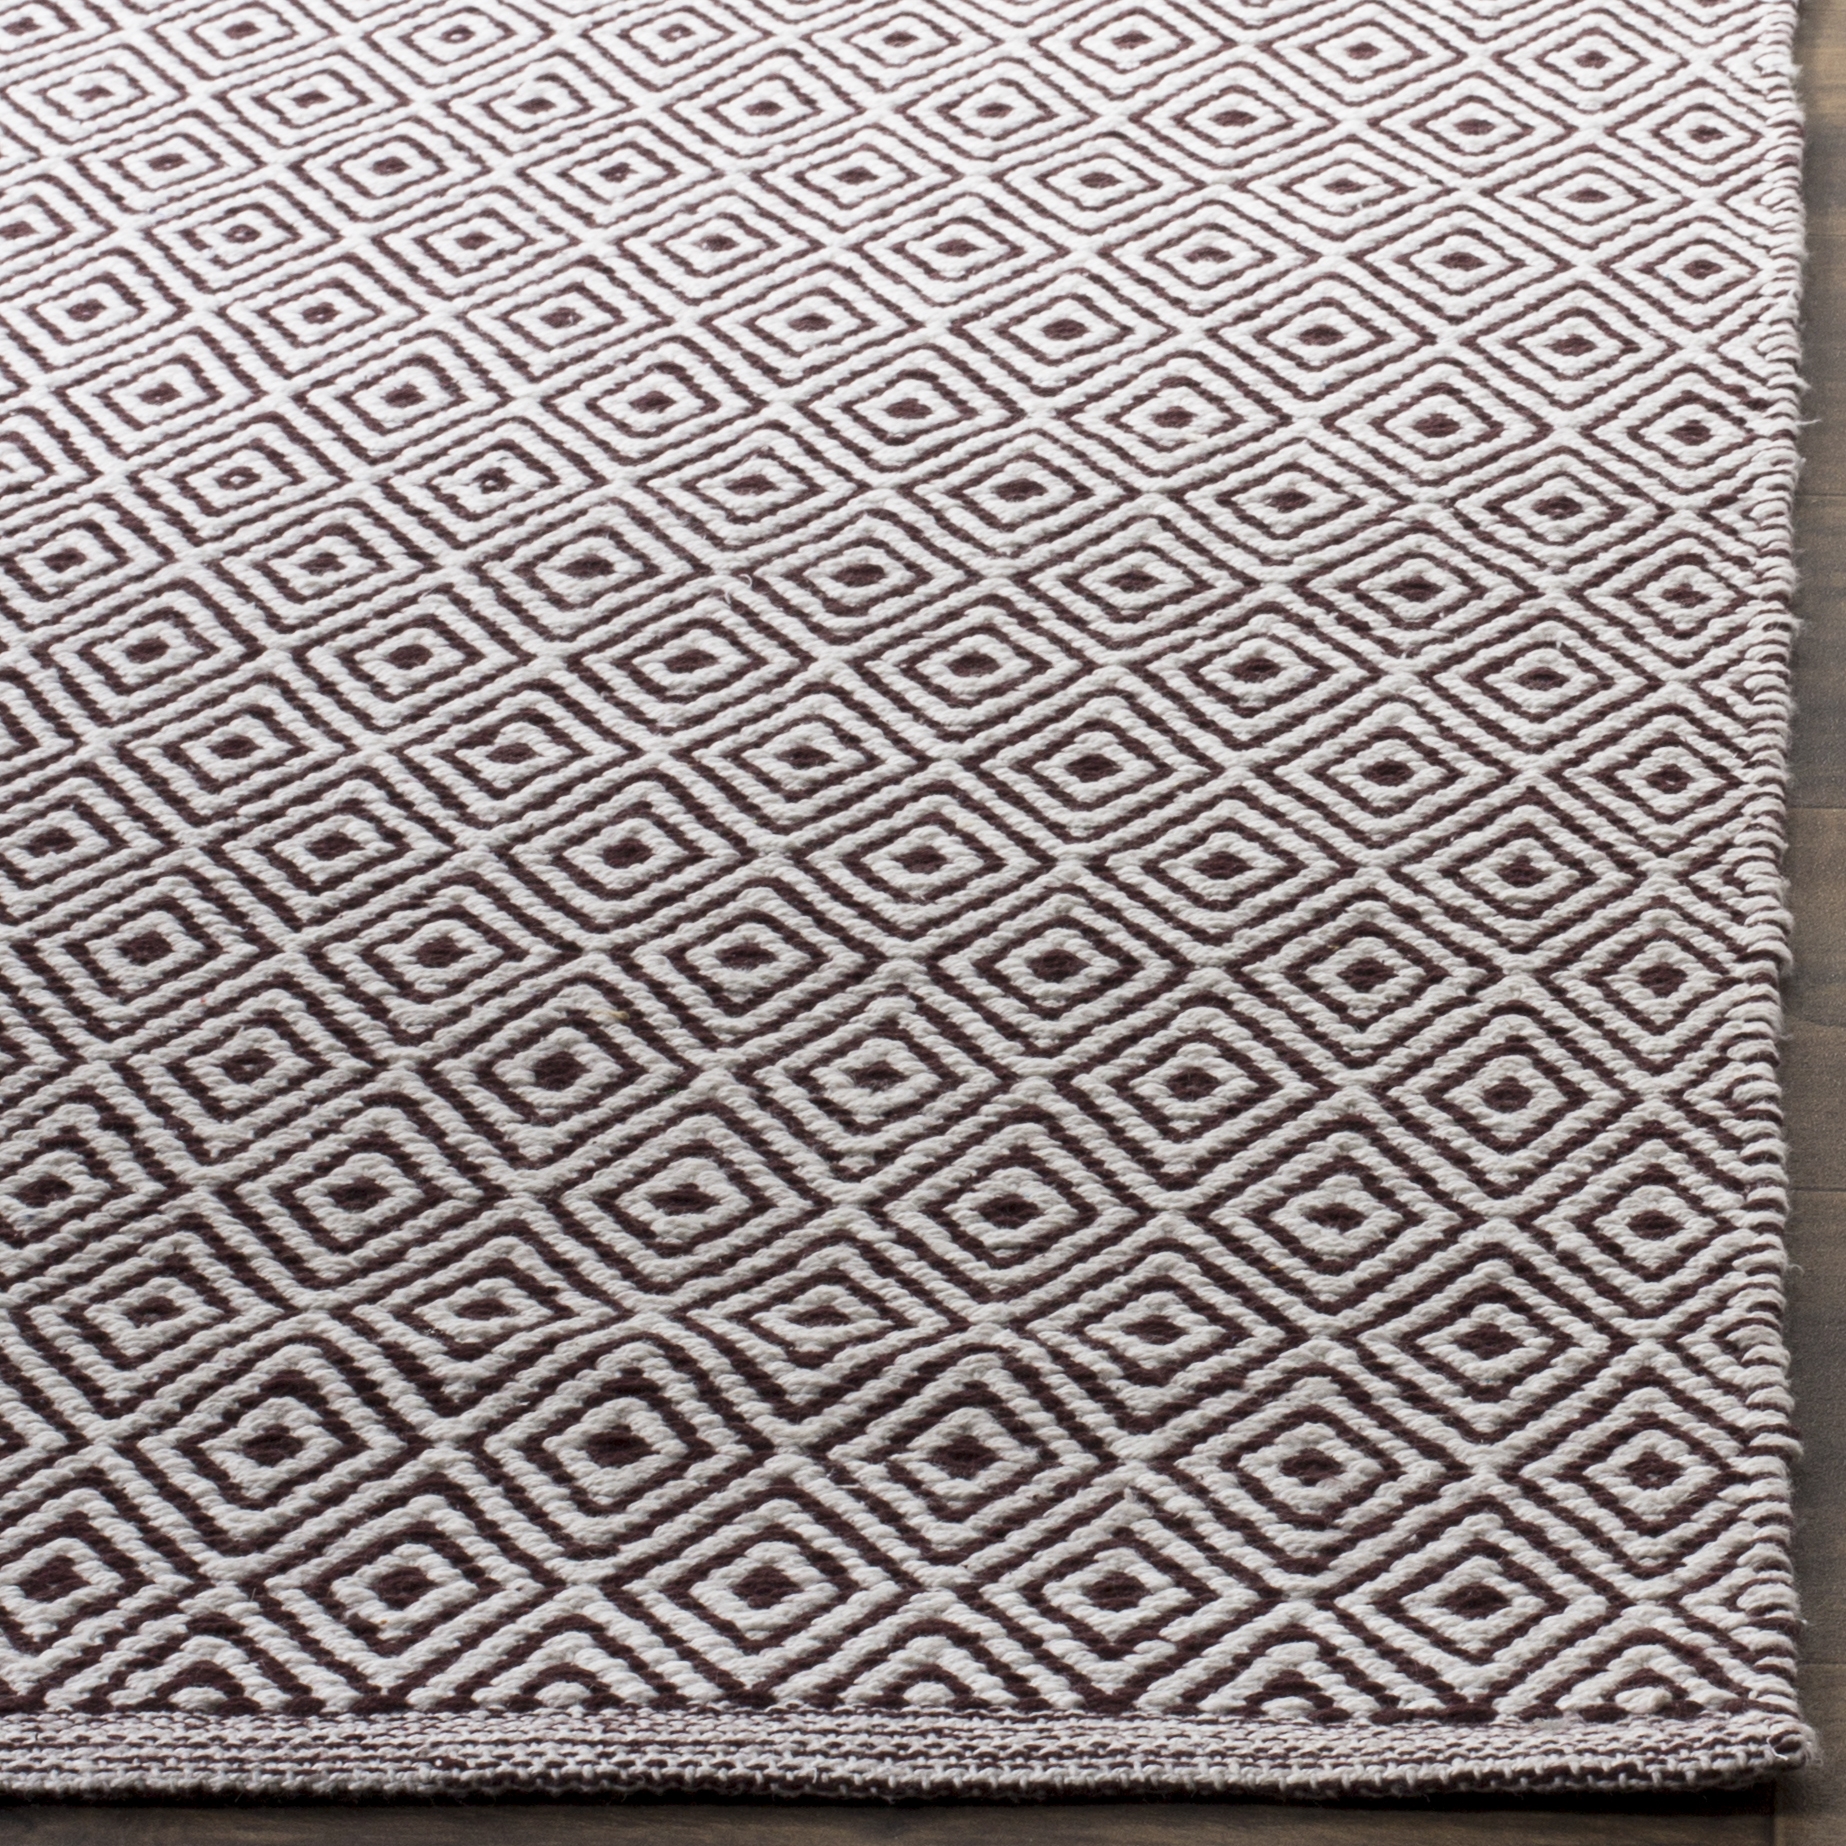 Arlo Home Hand Woven Area Rug, MTK515M, Ivory/Chocolate,  5' X 8' - Image 2